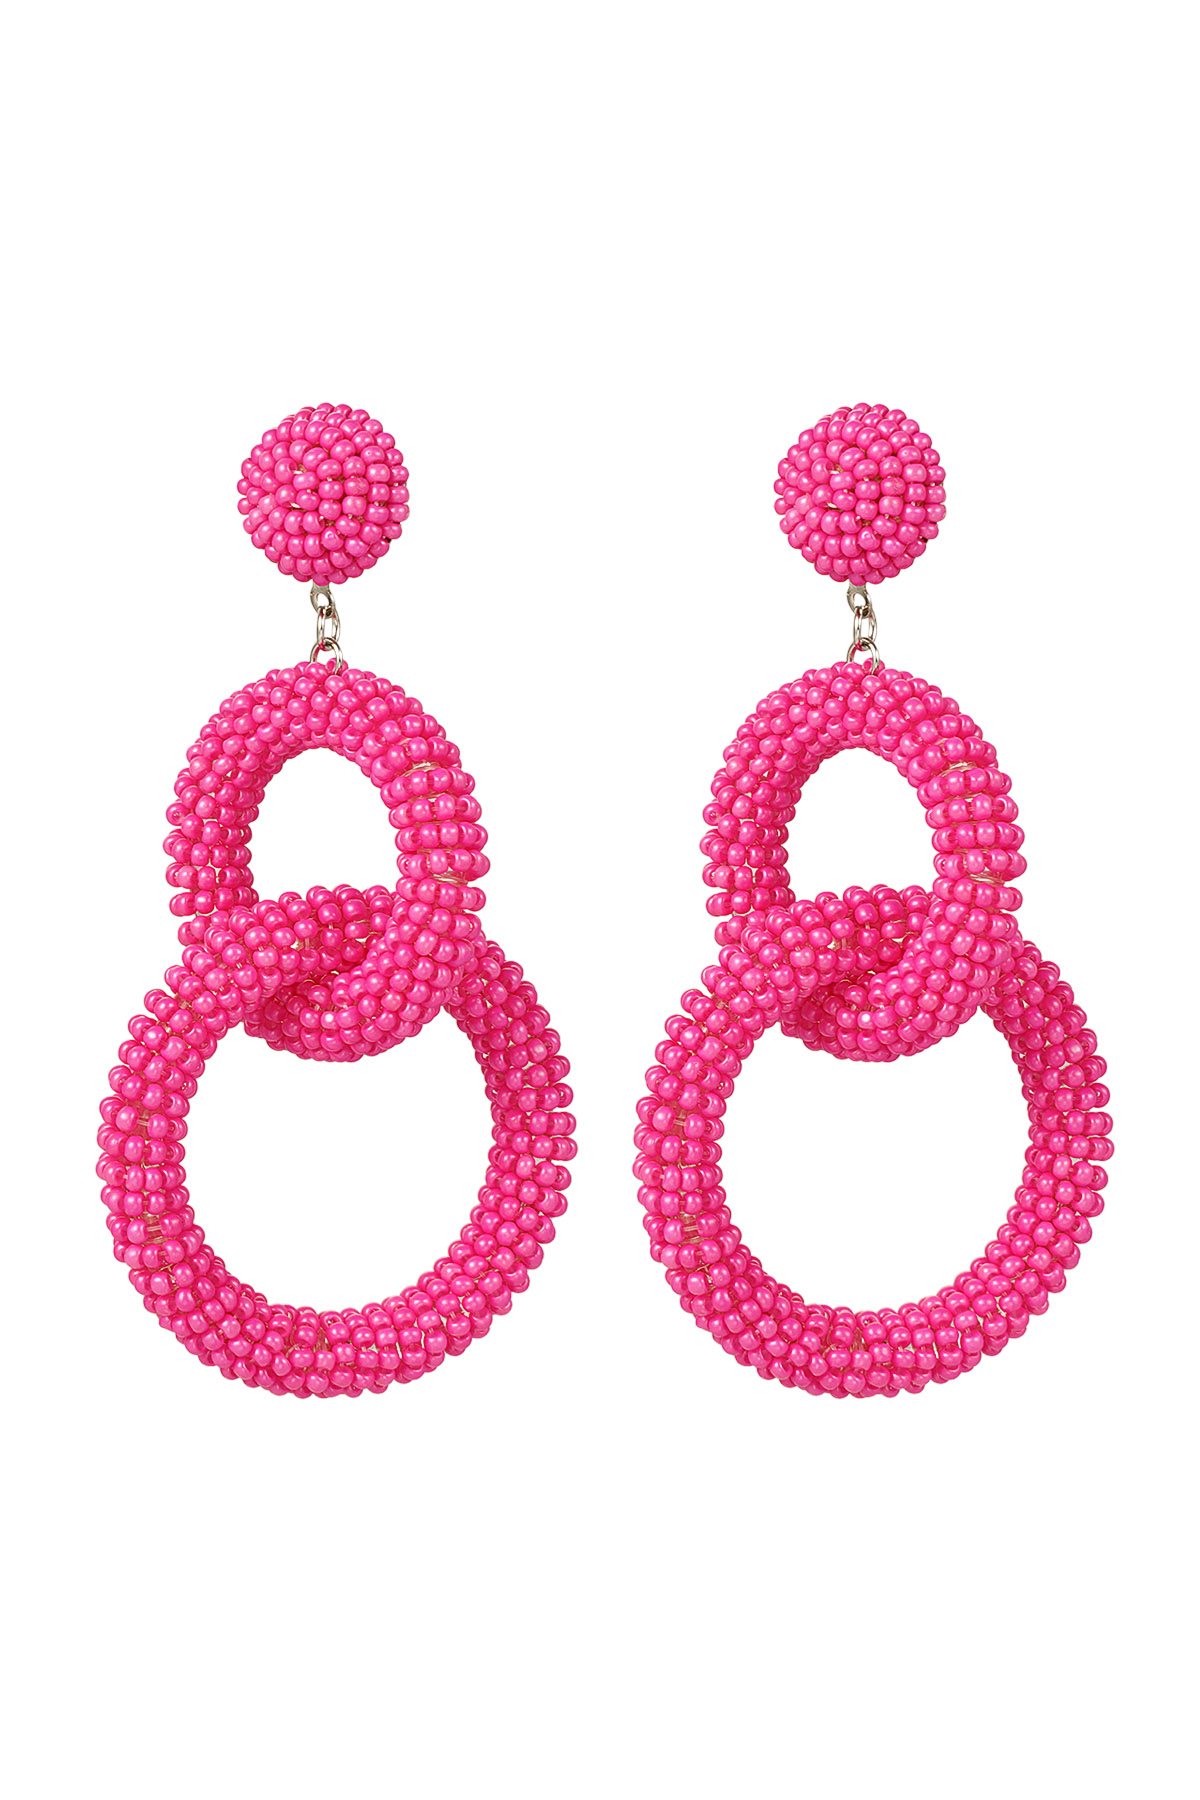 Beaded earrings crocheted - fuchsia h5 